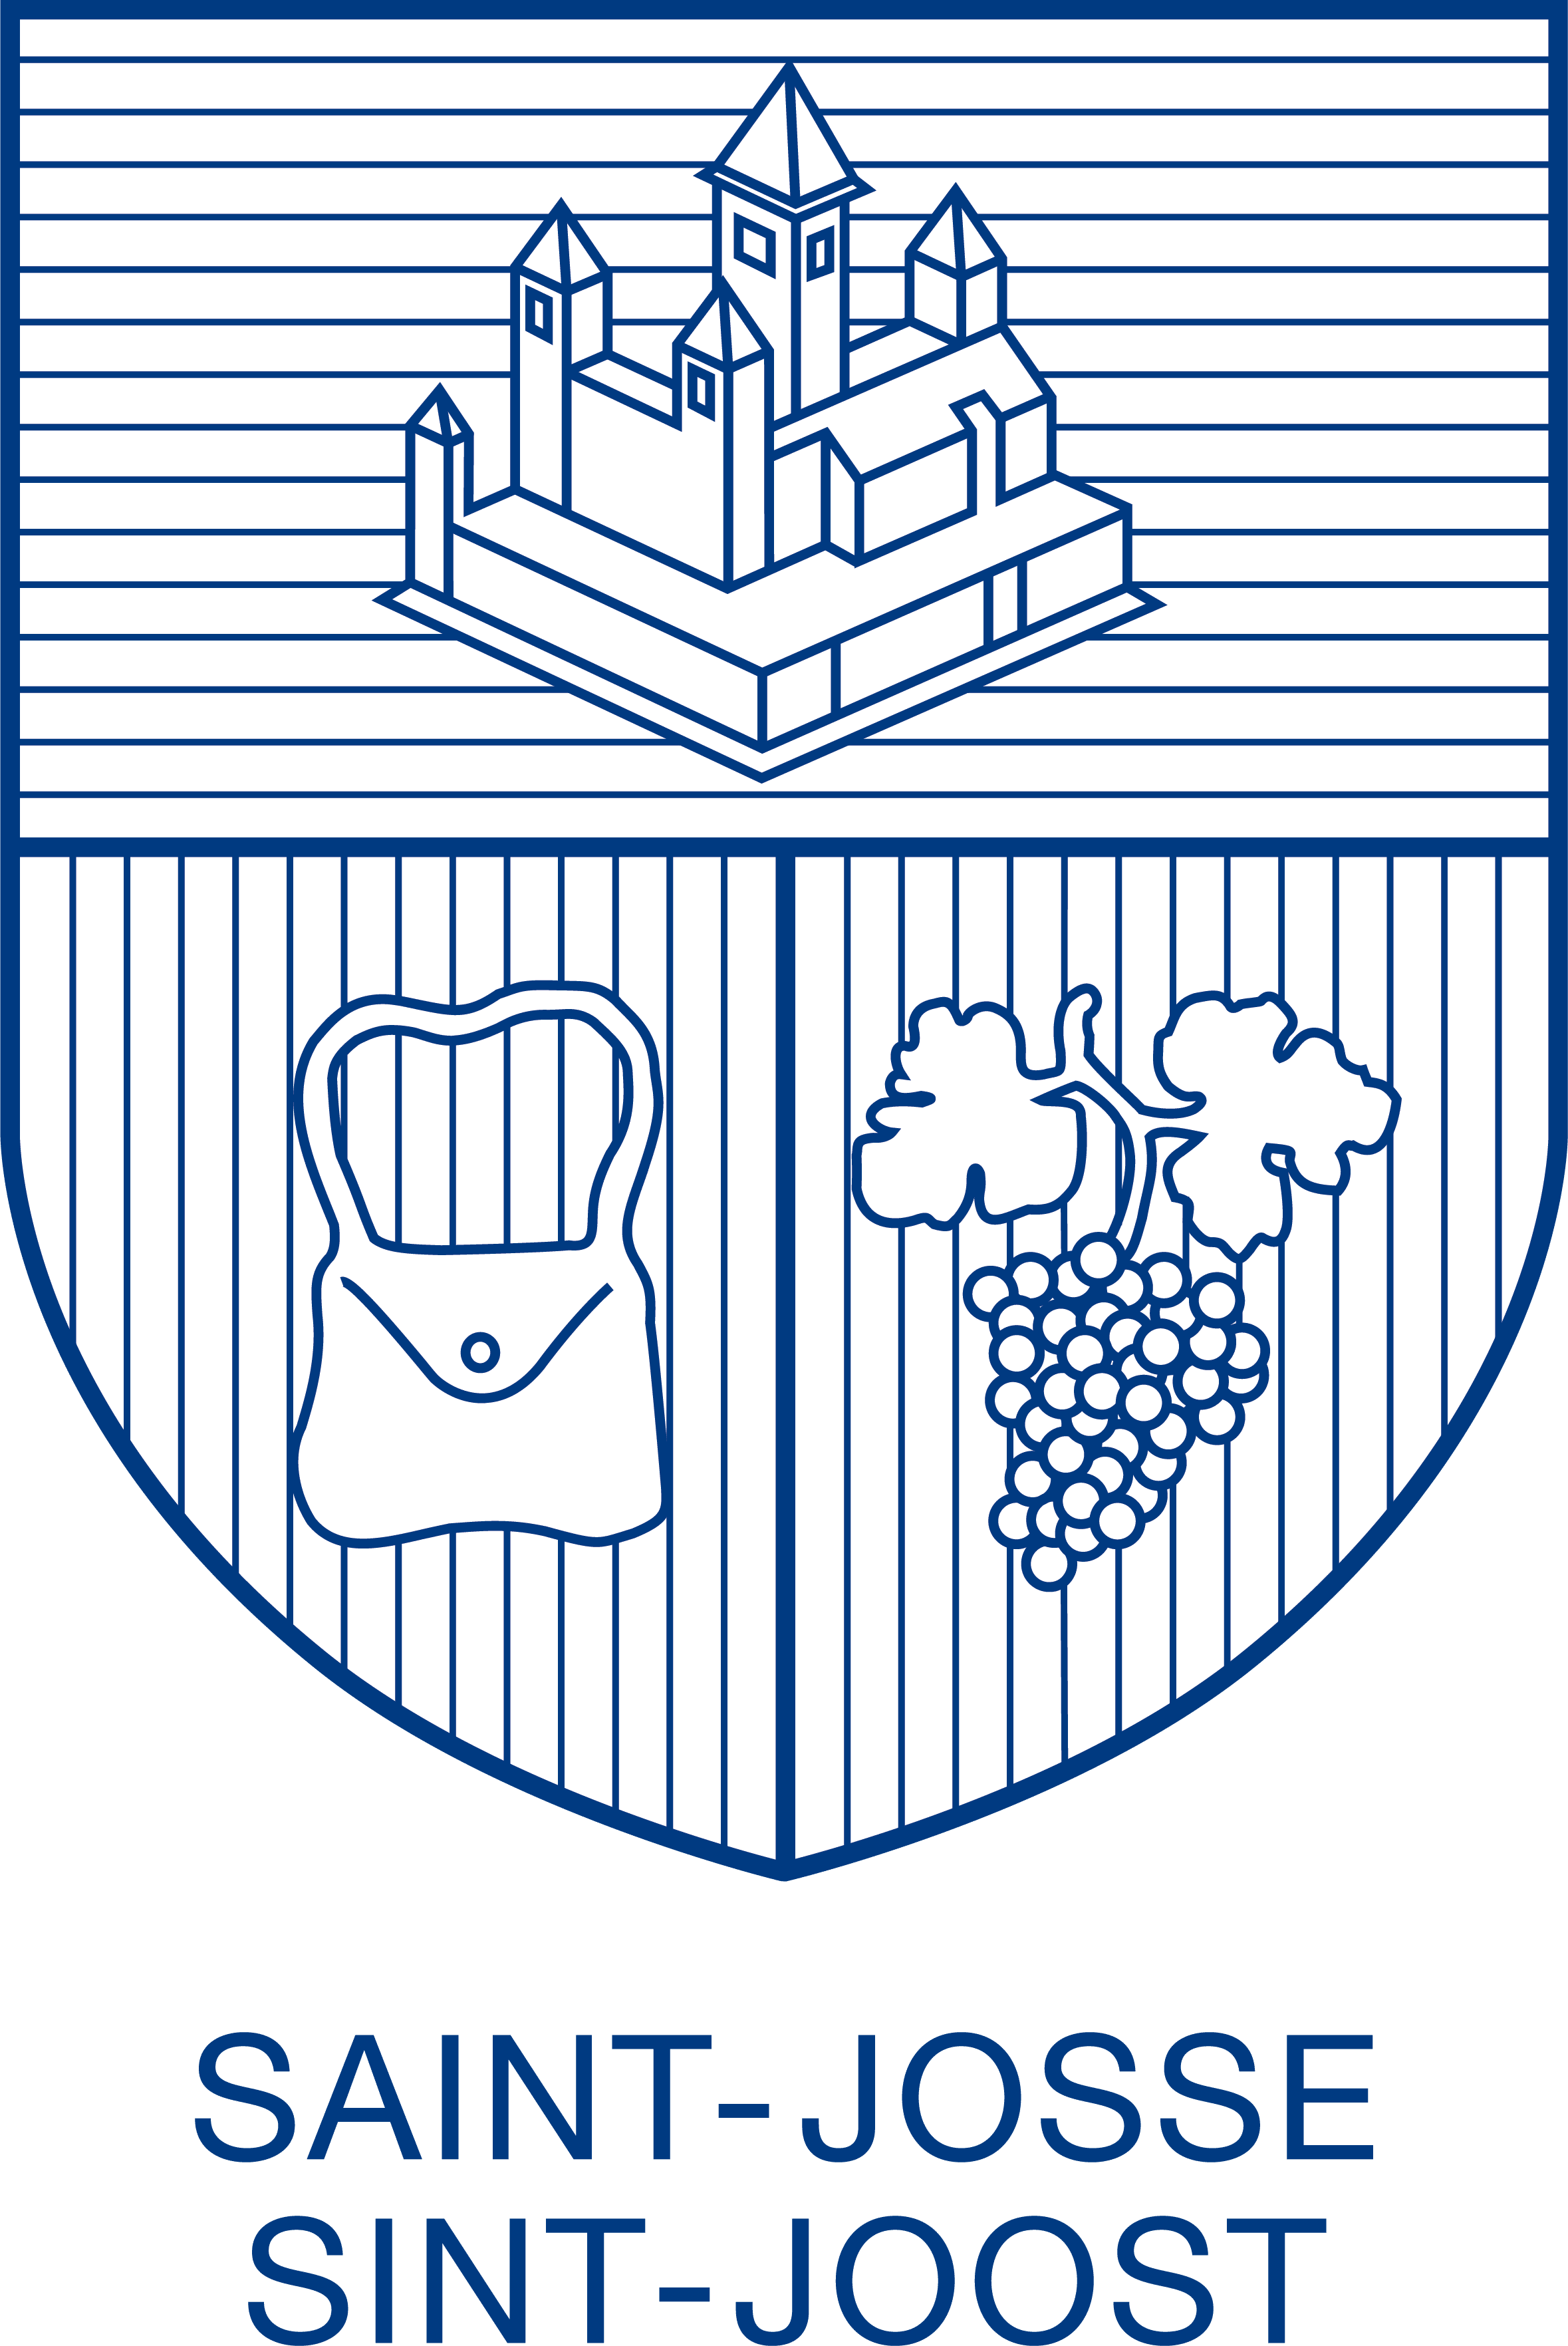 Saint-josse_logo_2024